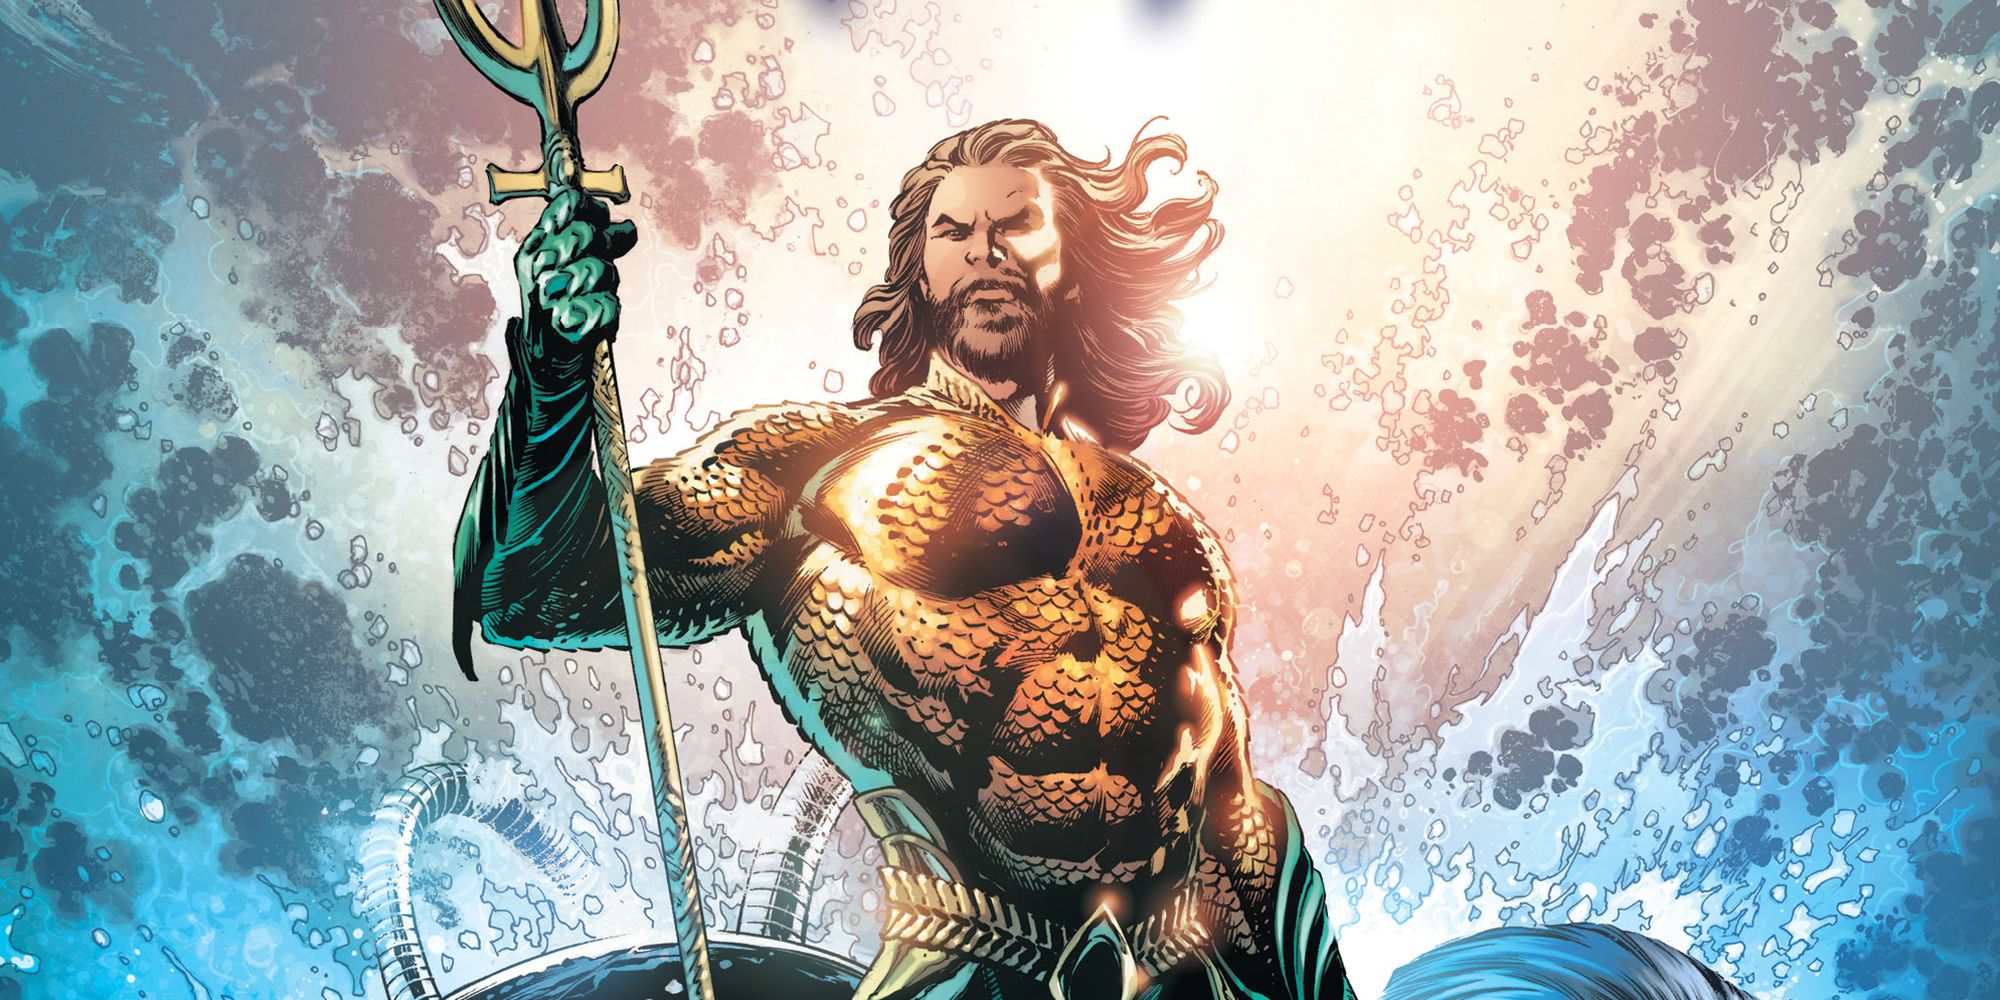 Aquaman and the Last Kingdom #1 cover art